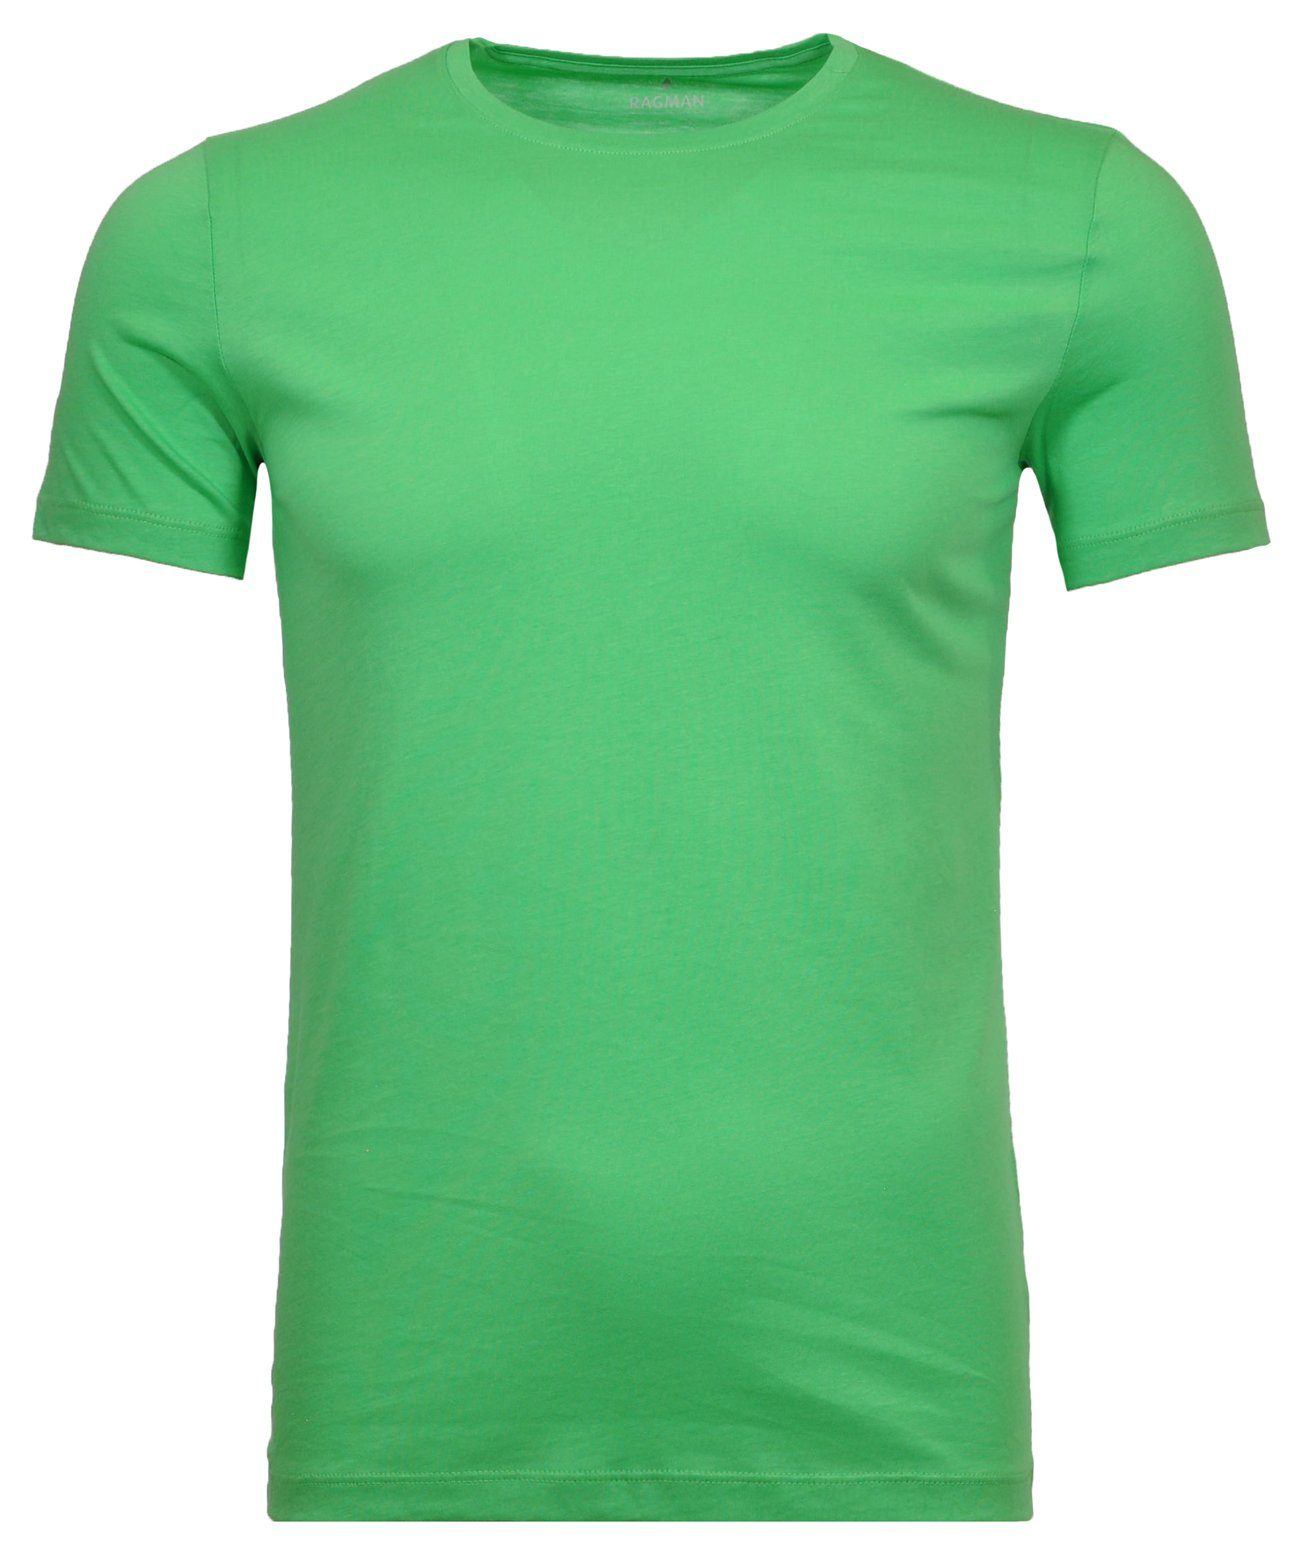 RAGMAN T-Shirt Grün-371